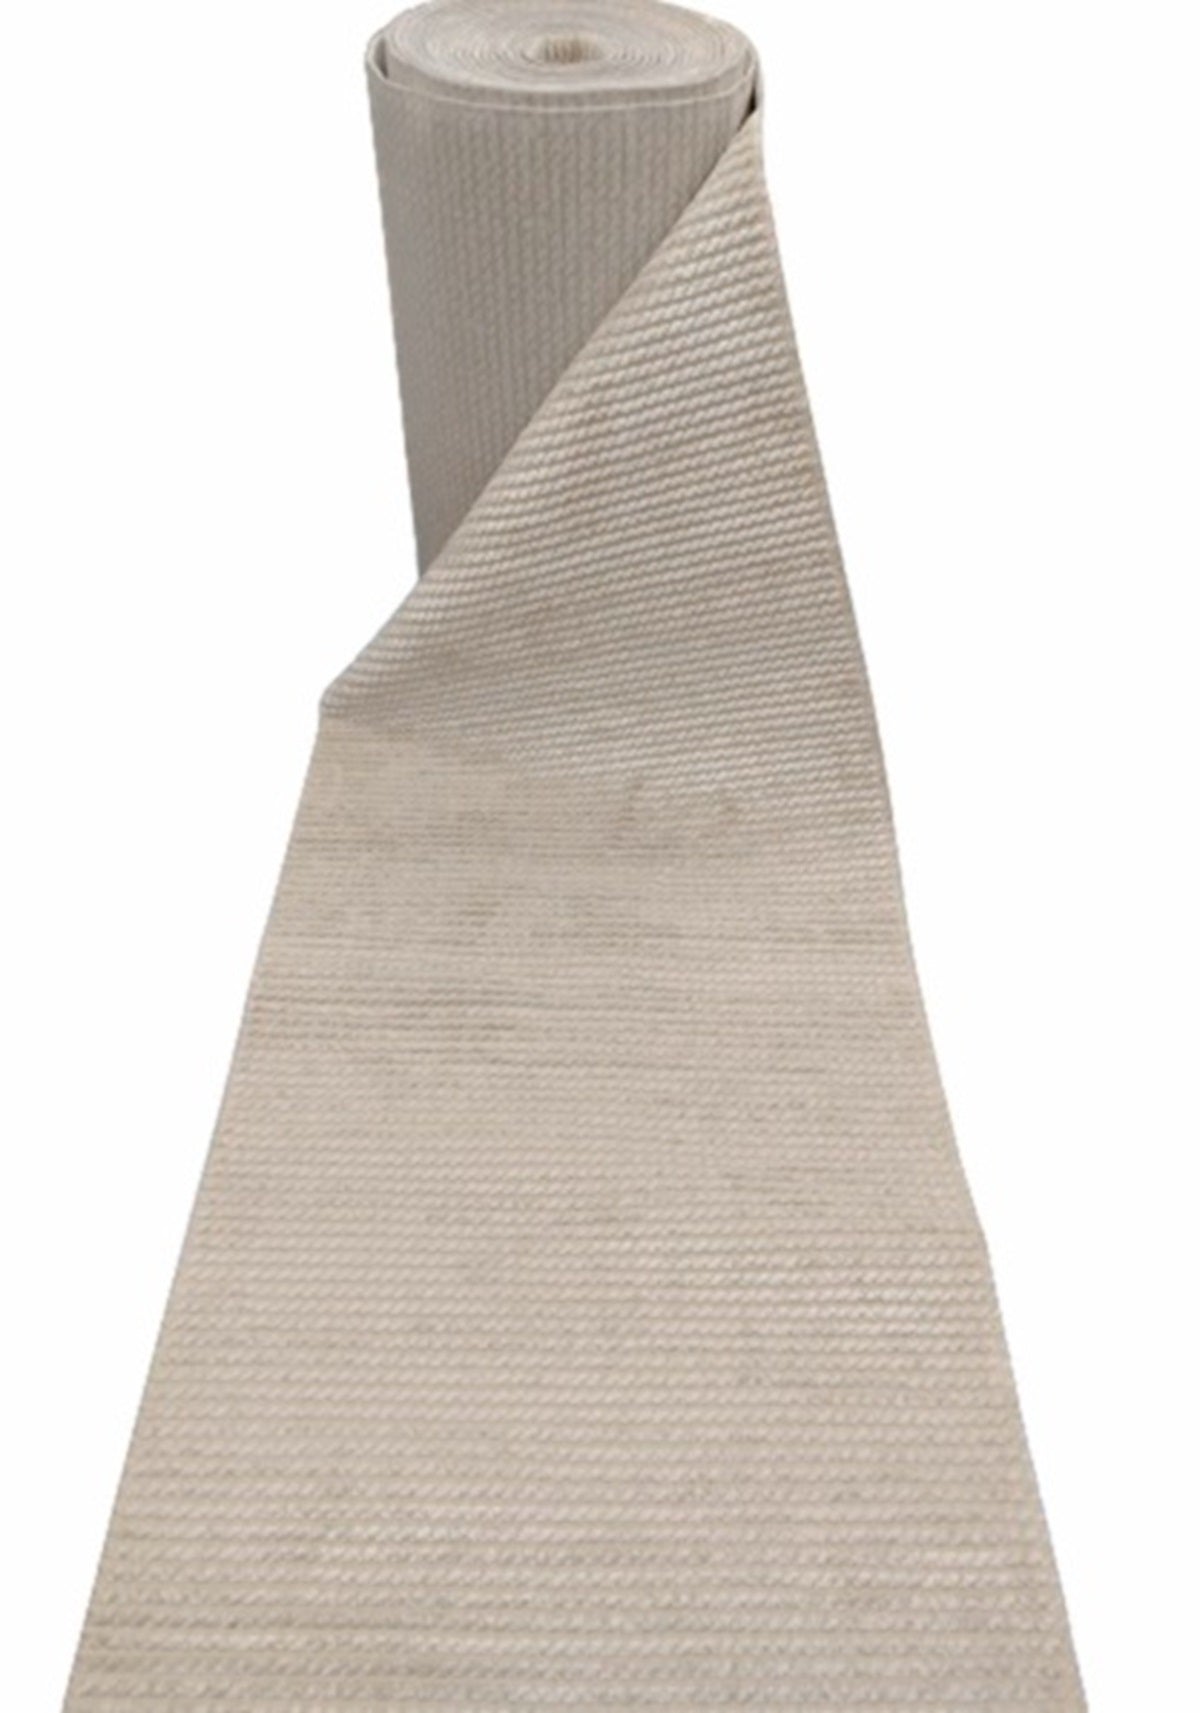 Traversa Pierre Cardin Line, crem, latime 60 cm (surfilata)